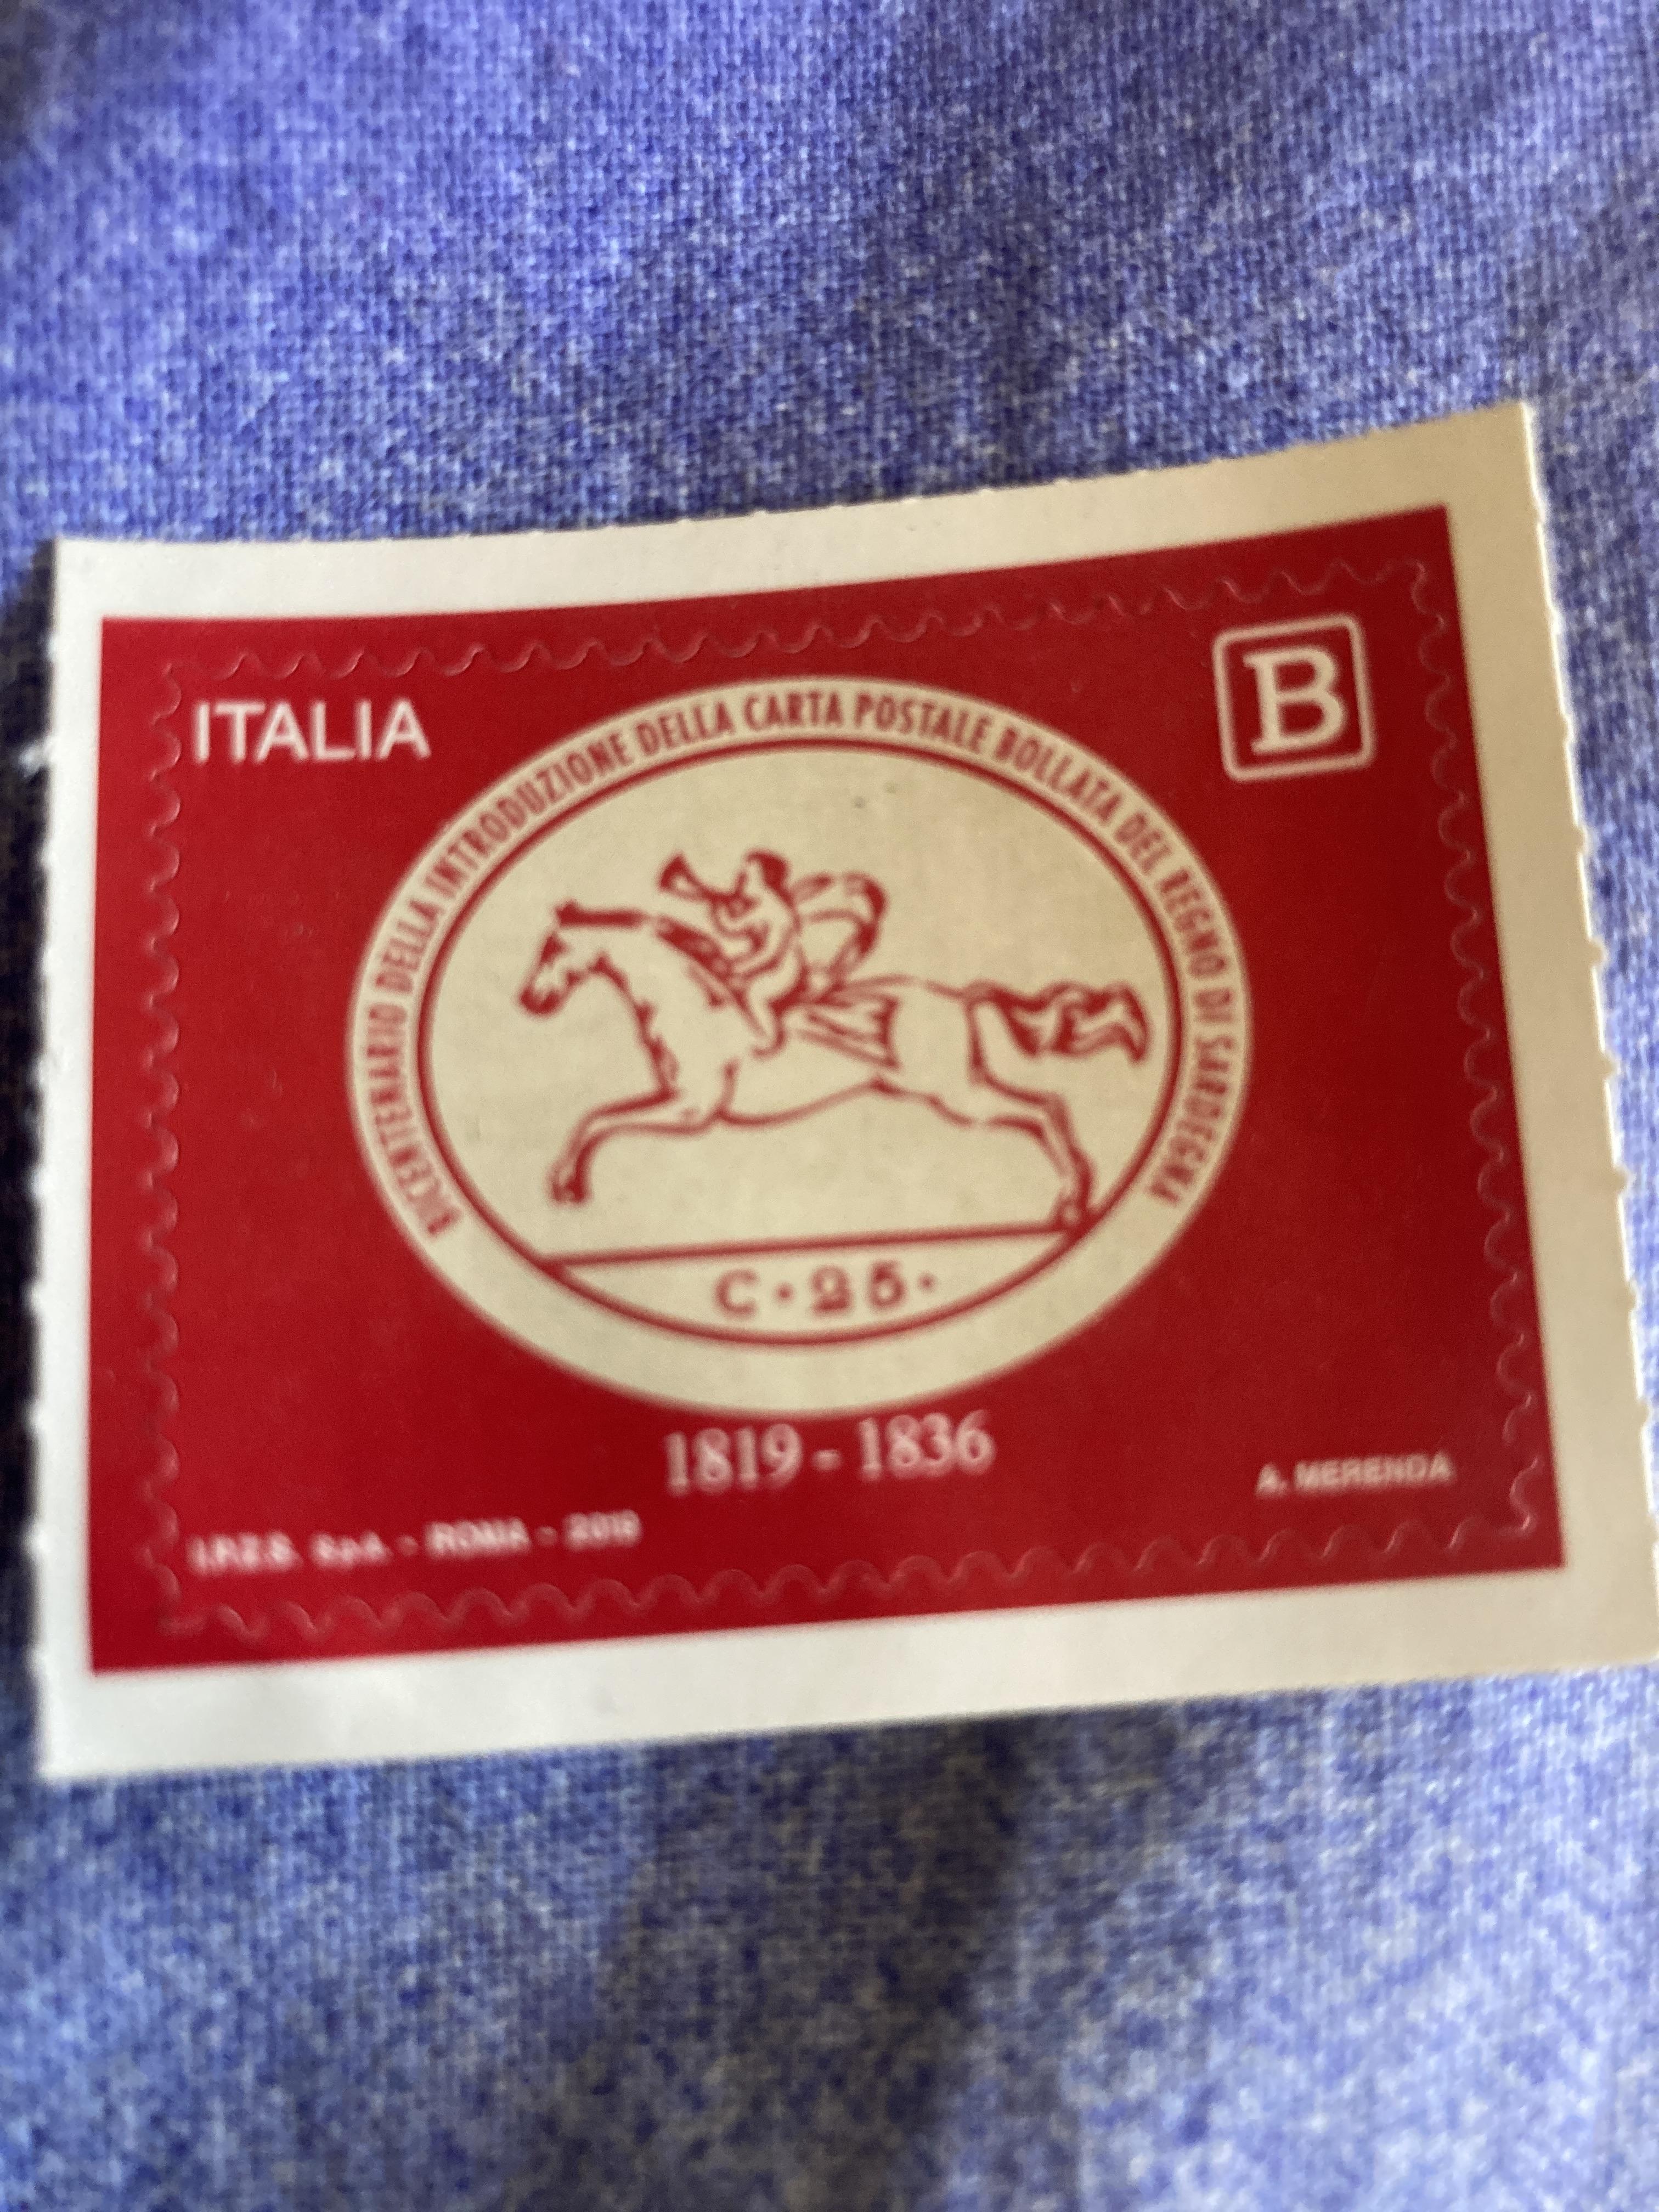 troc de troc timbre italie neuf image 0